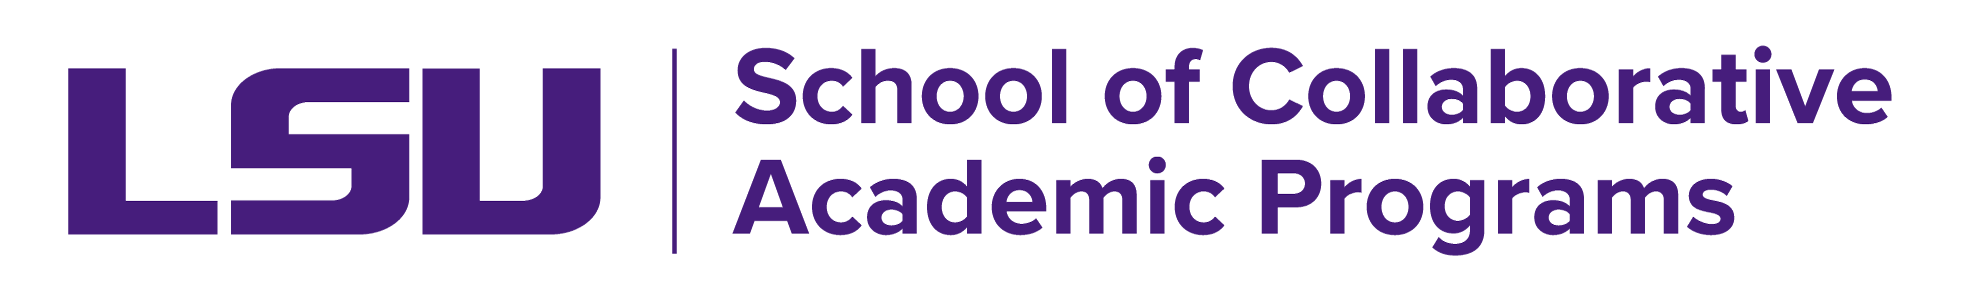 School of Collaborative Academic Programs